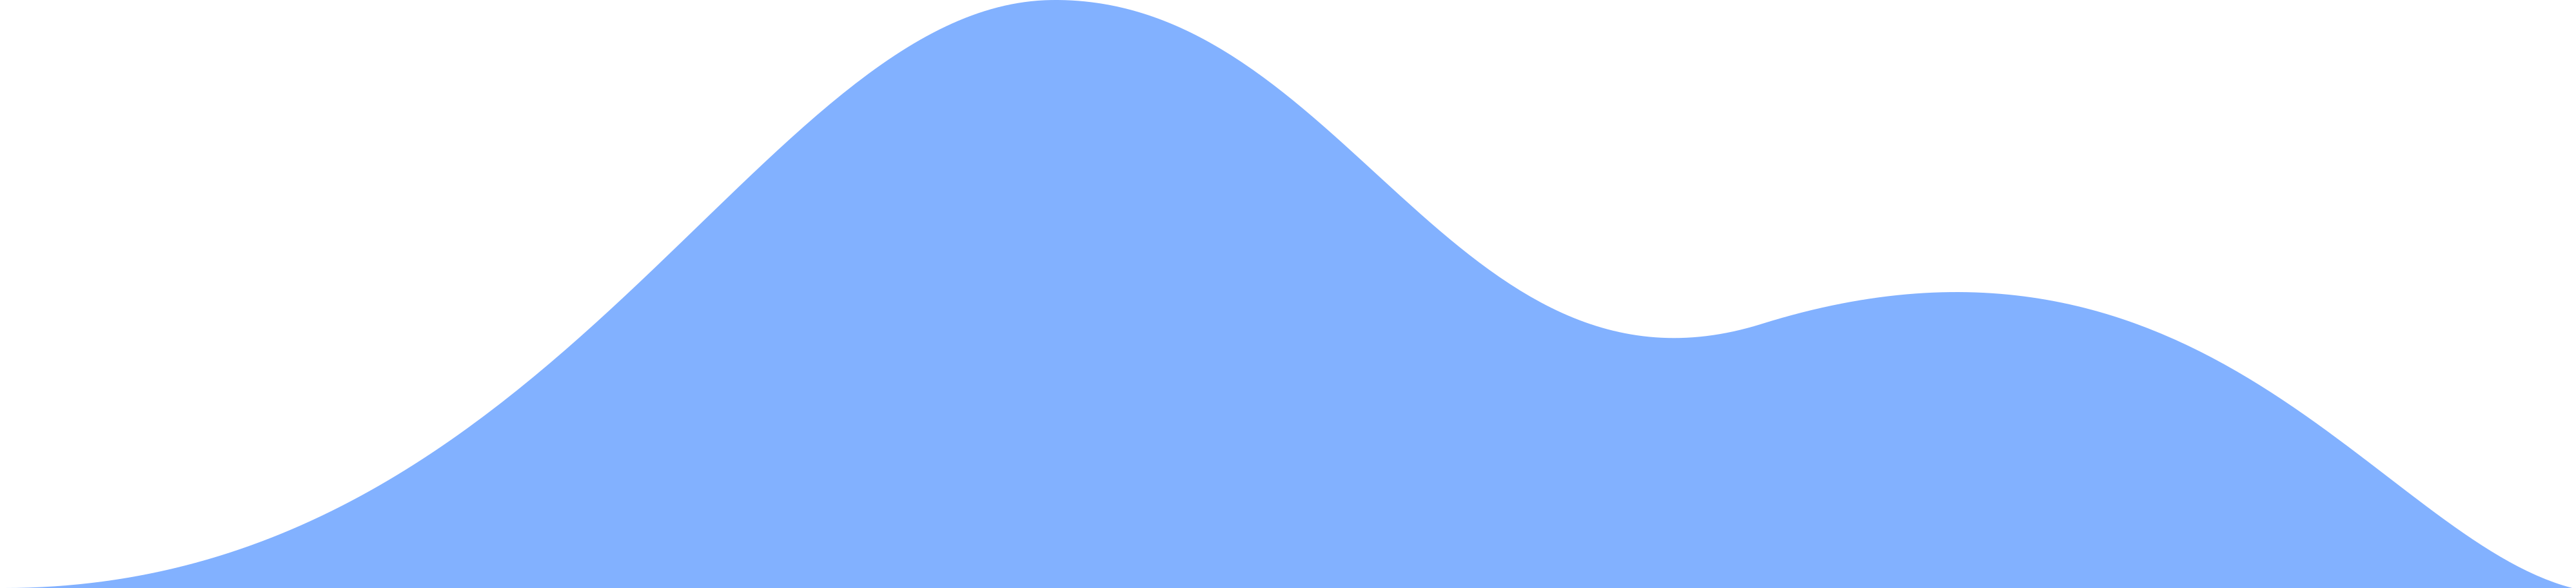 blue wavy cloud Illustration in PNG, SVG